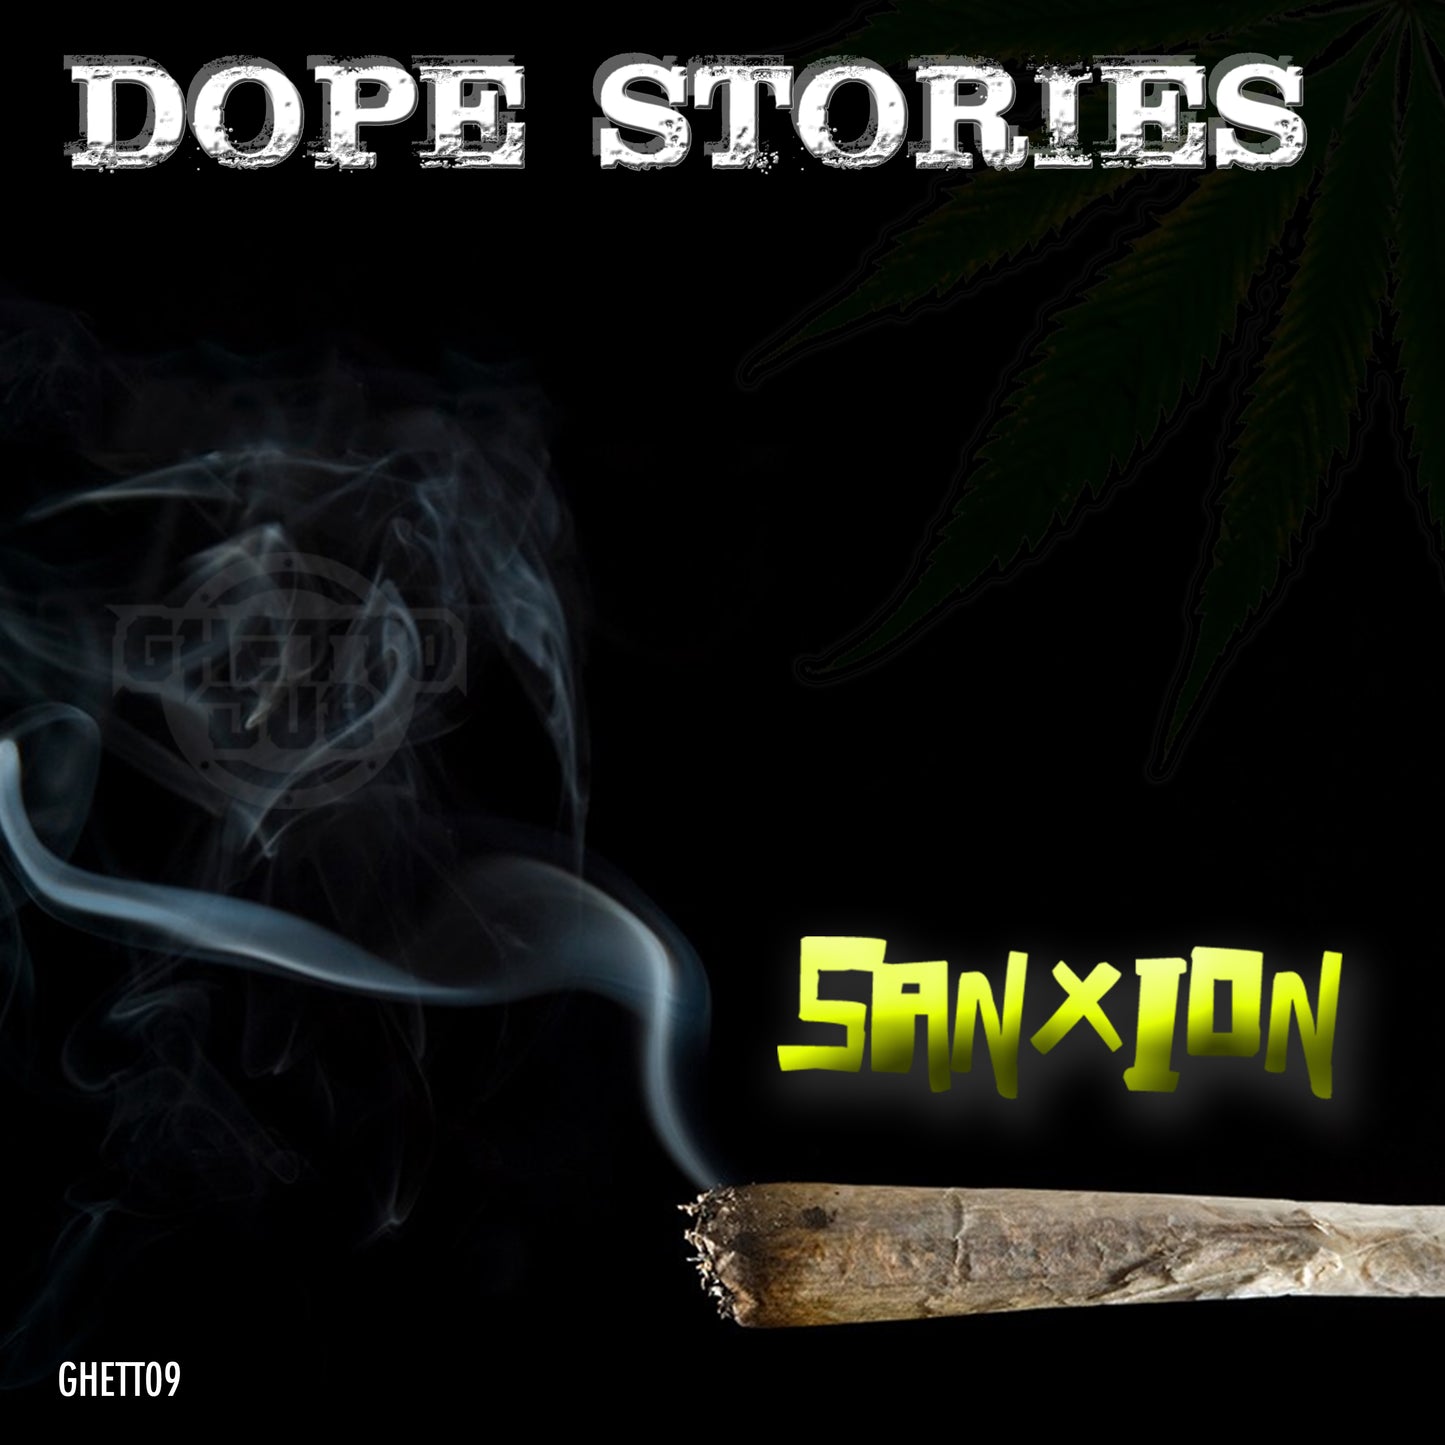 Sanxion - Dope Stories